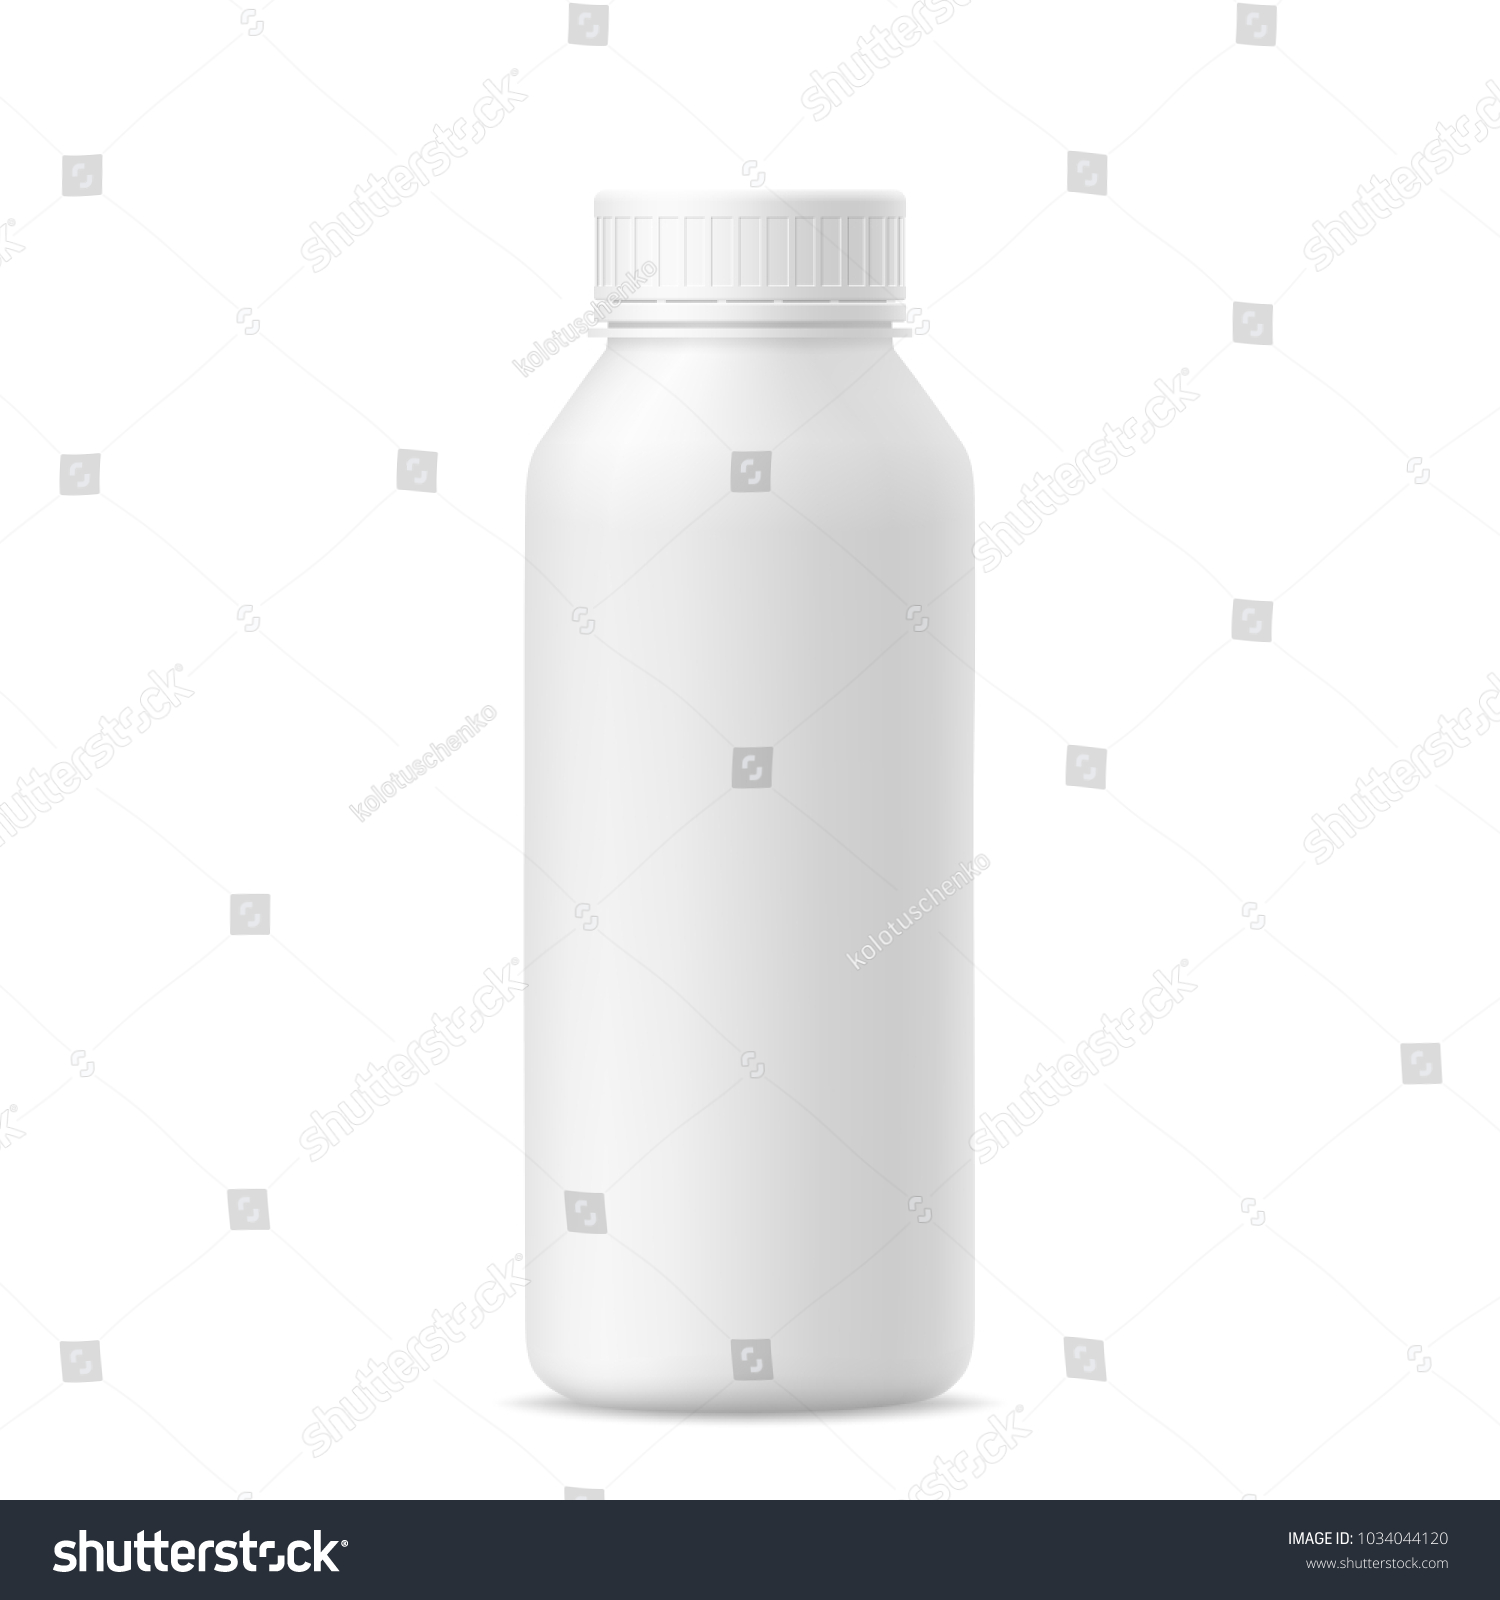 SVG of 3d mockup of plastic milk, yogurt, drink, shampoo bottle with lid on white background. Vector illustration of package for liquid. Template for your design. svg